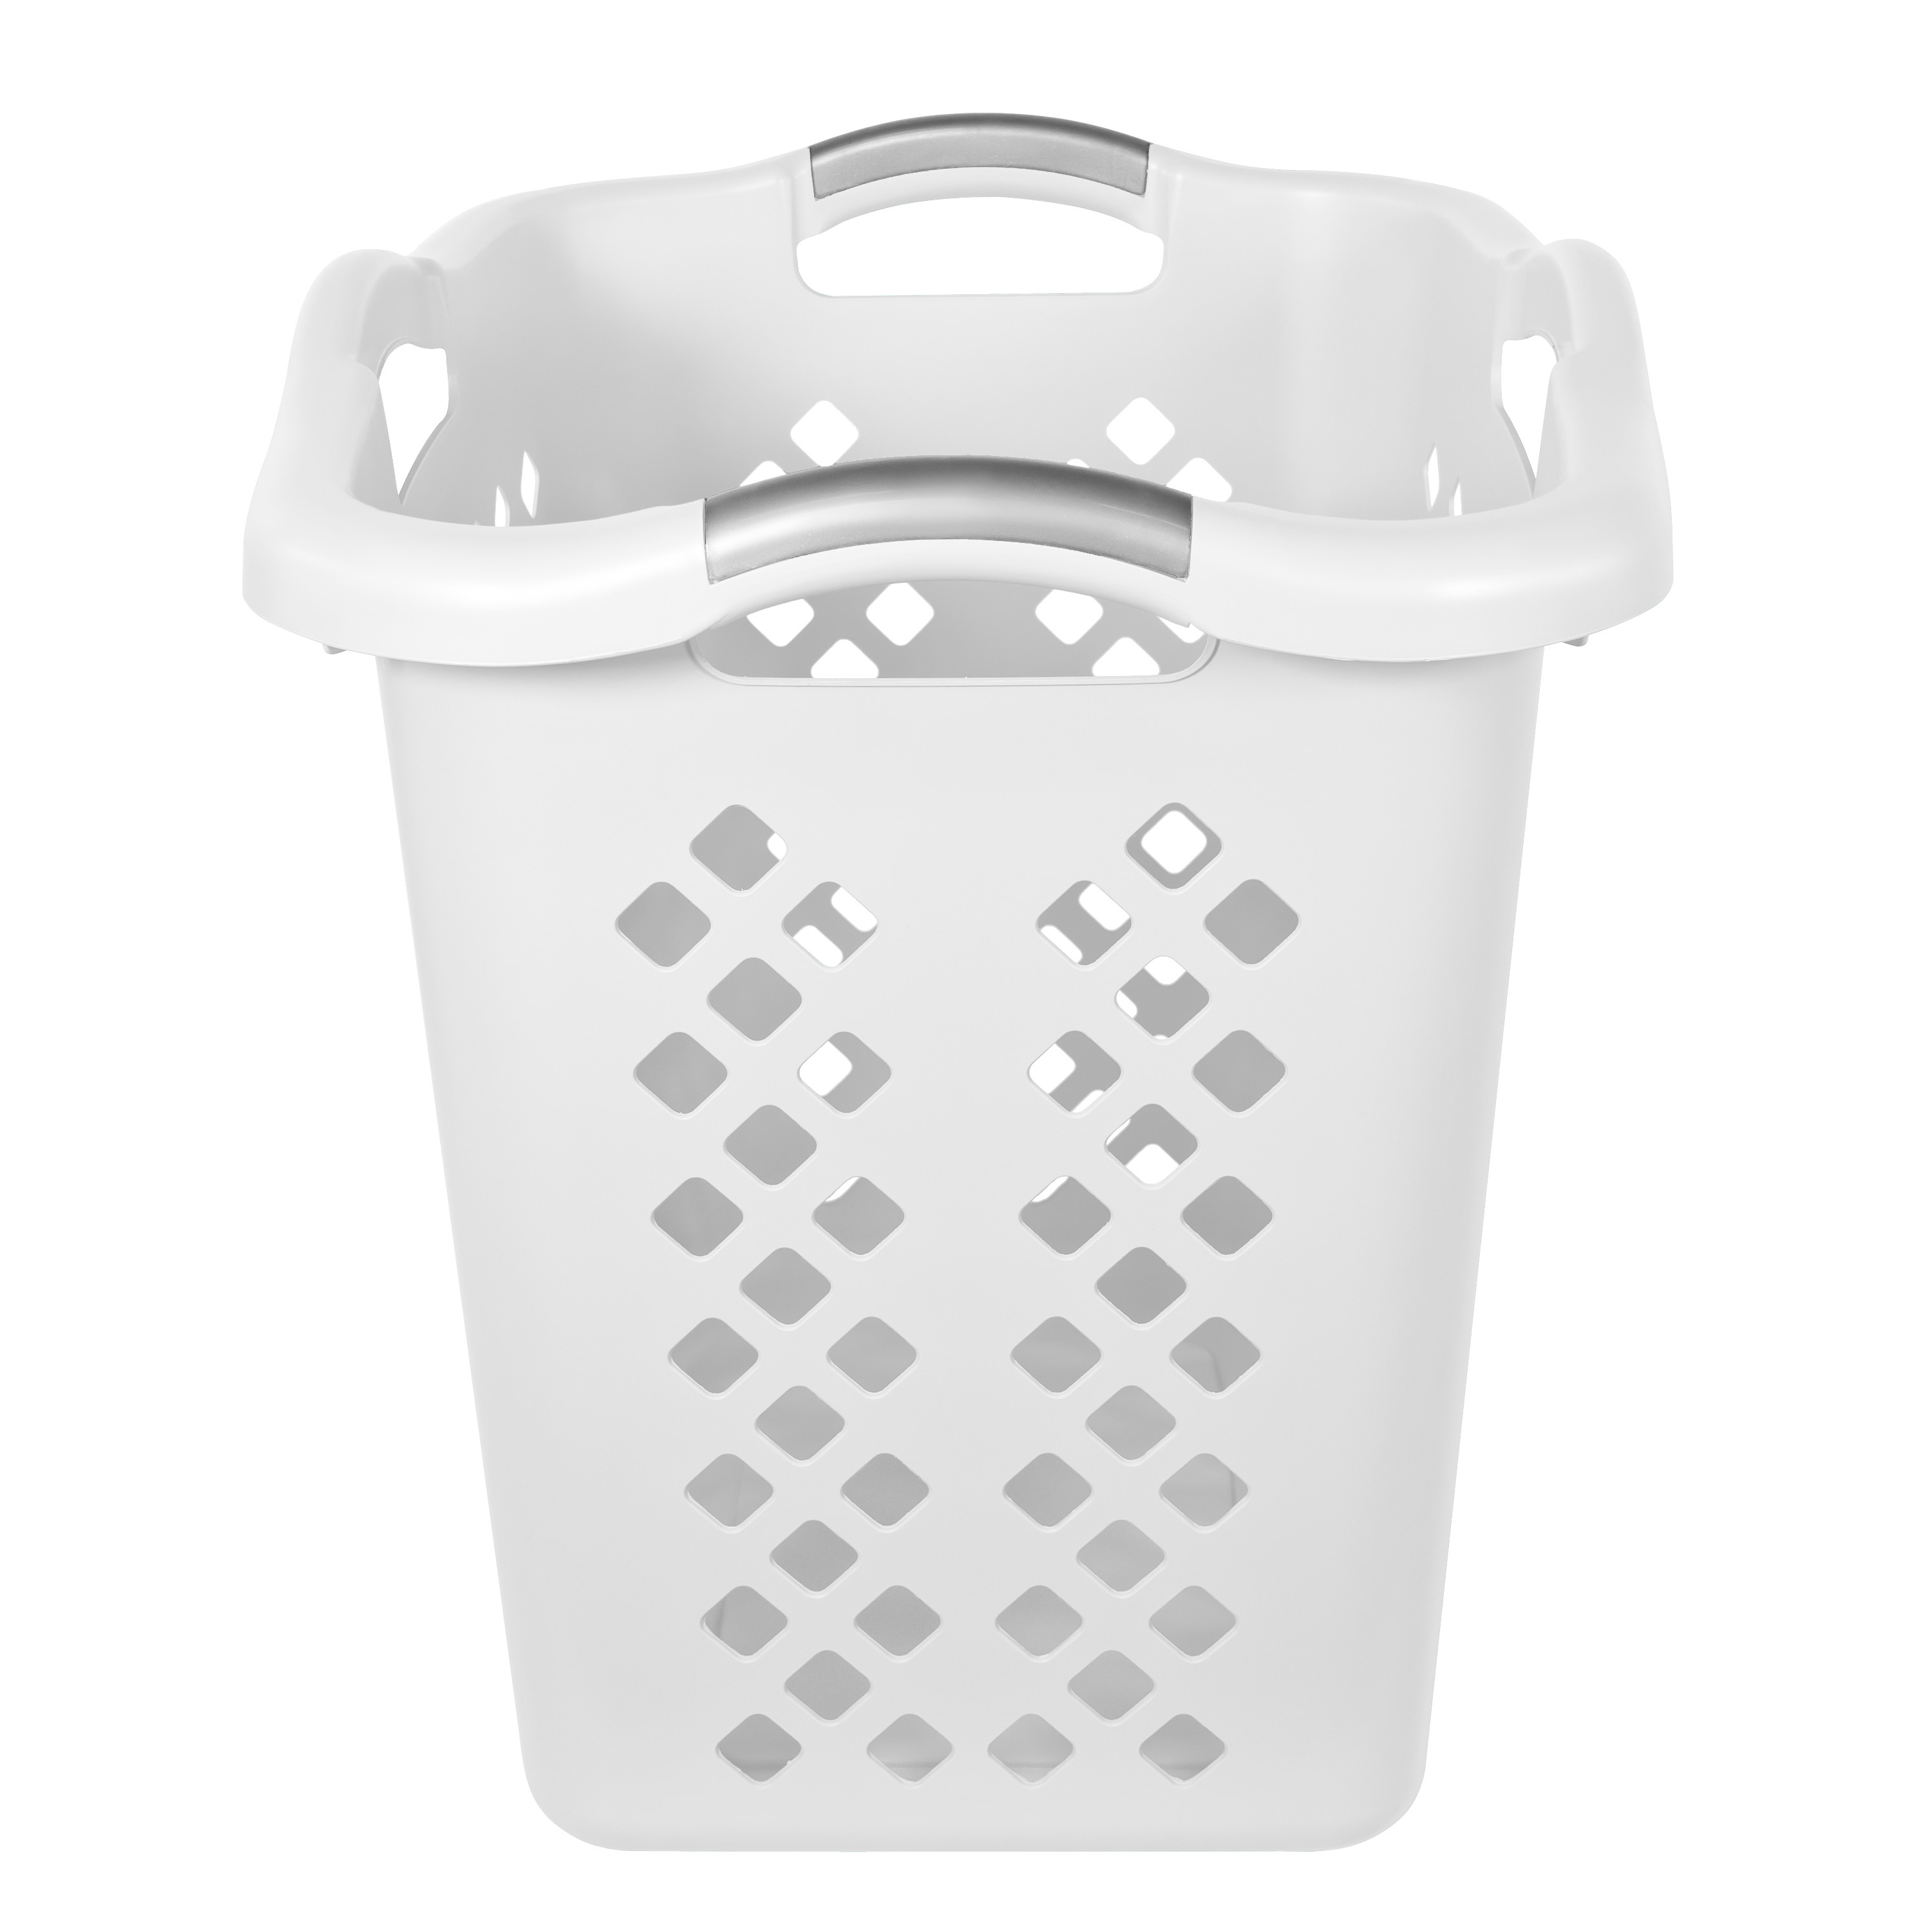 Home Logic 2 Bushel Lamper Laundry Basket with Silver Handles, White - image 4 of 8